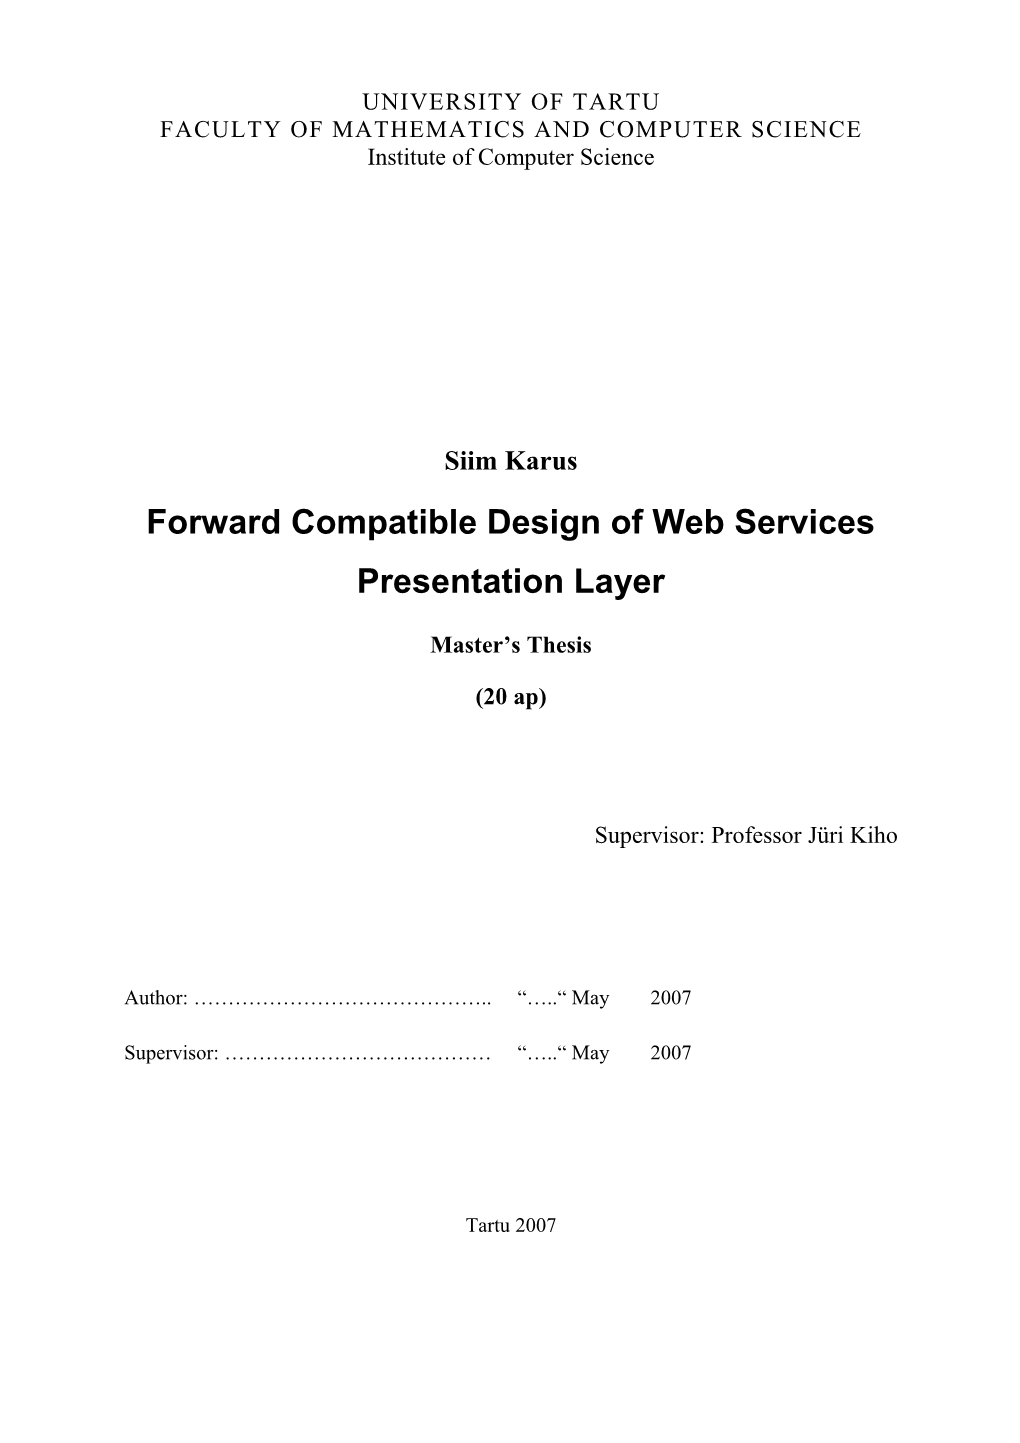 Forward Compatible Design of Web Services Presentation Layer